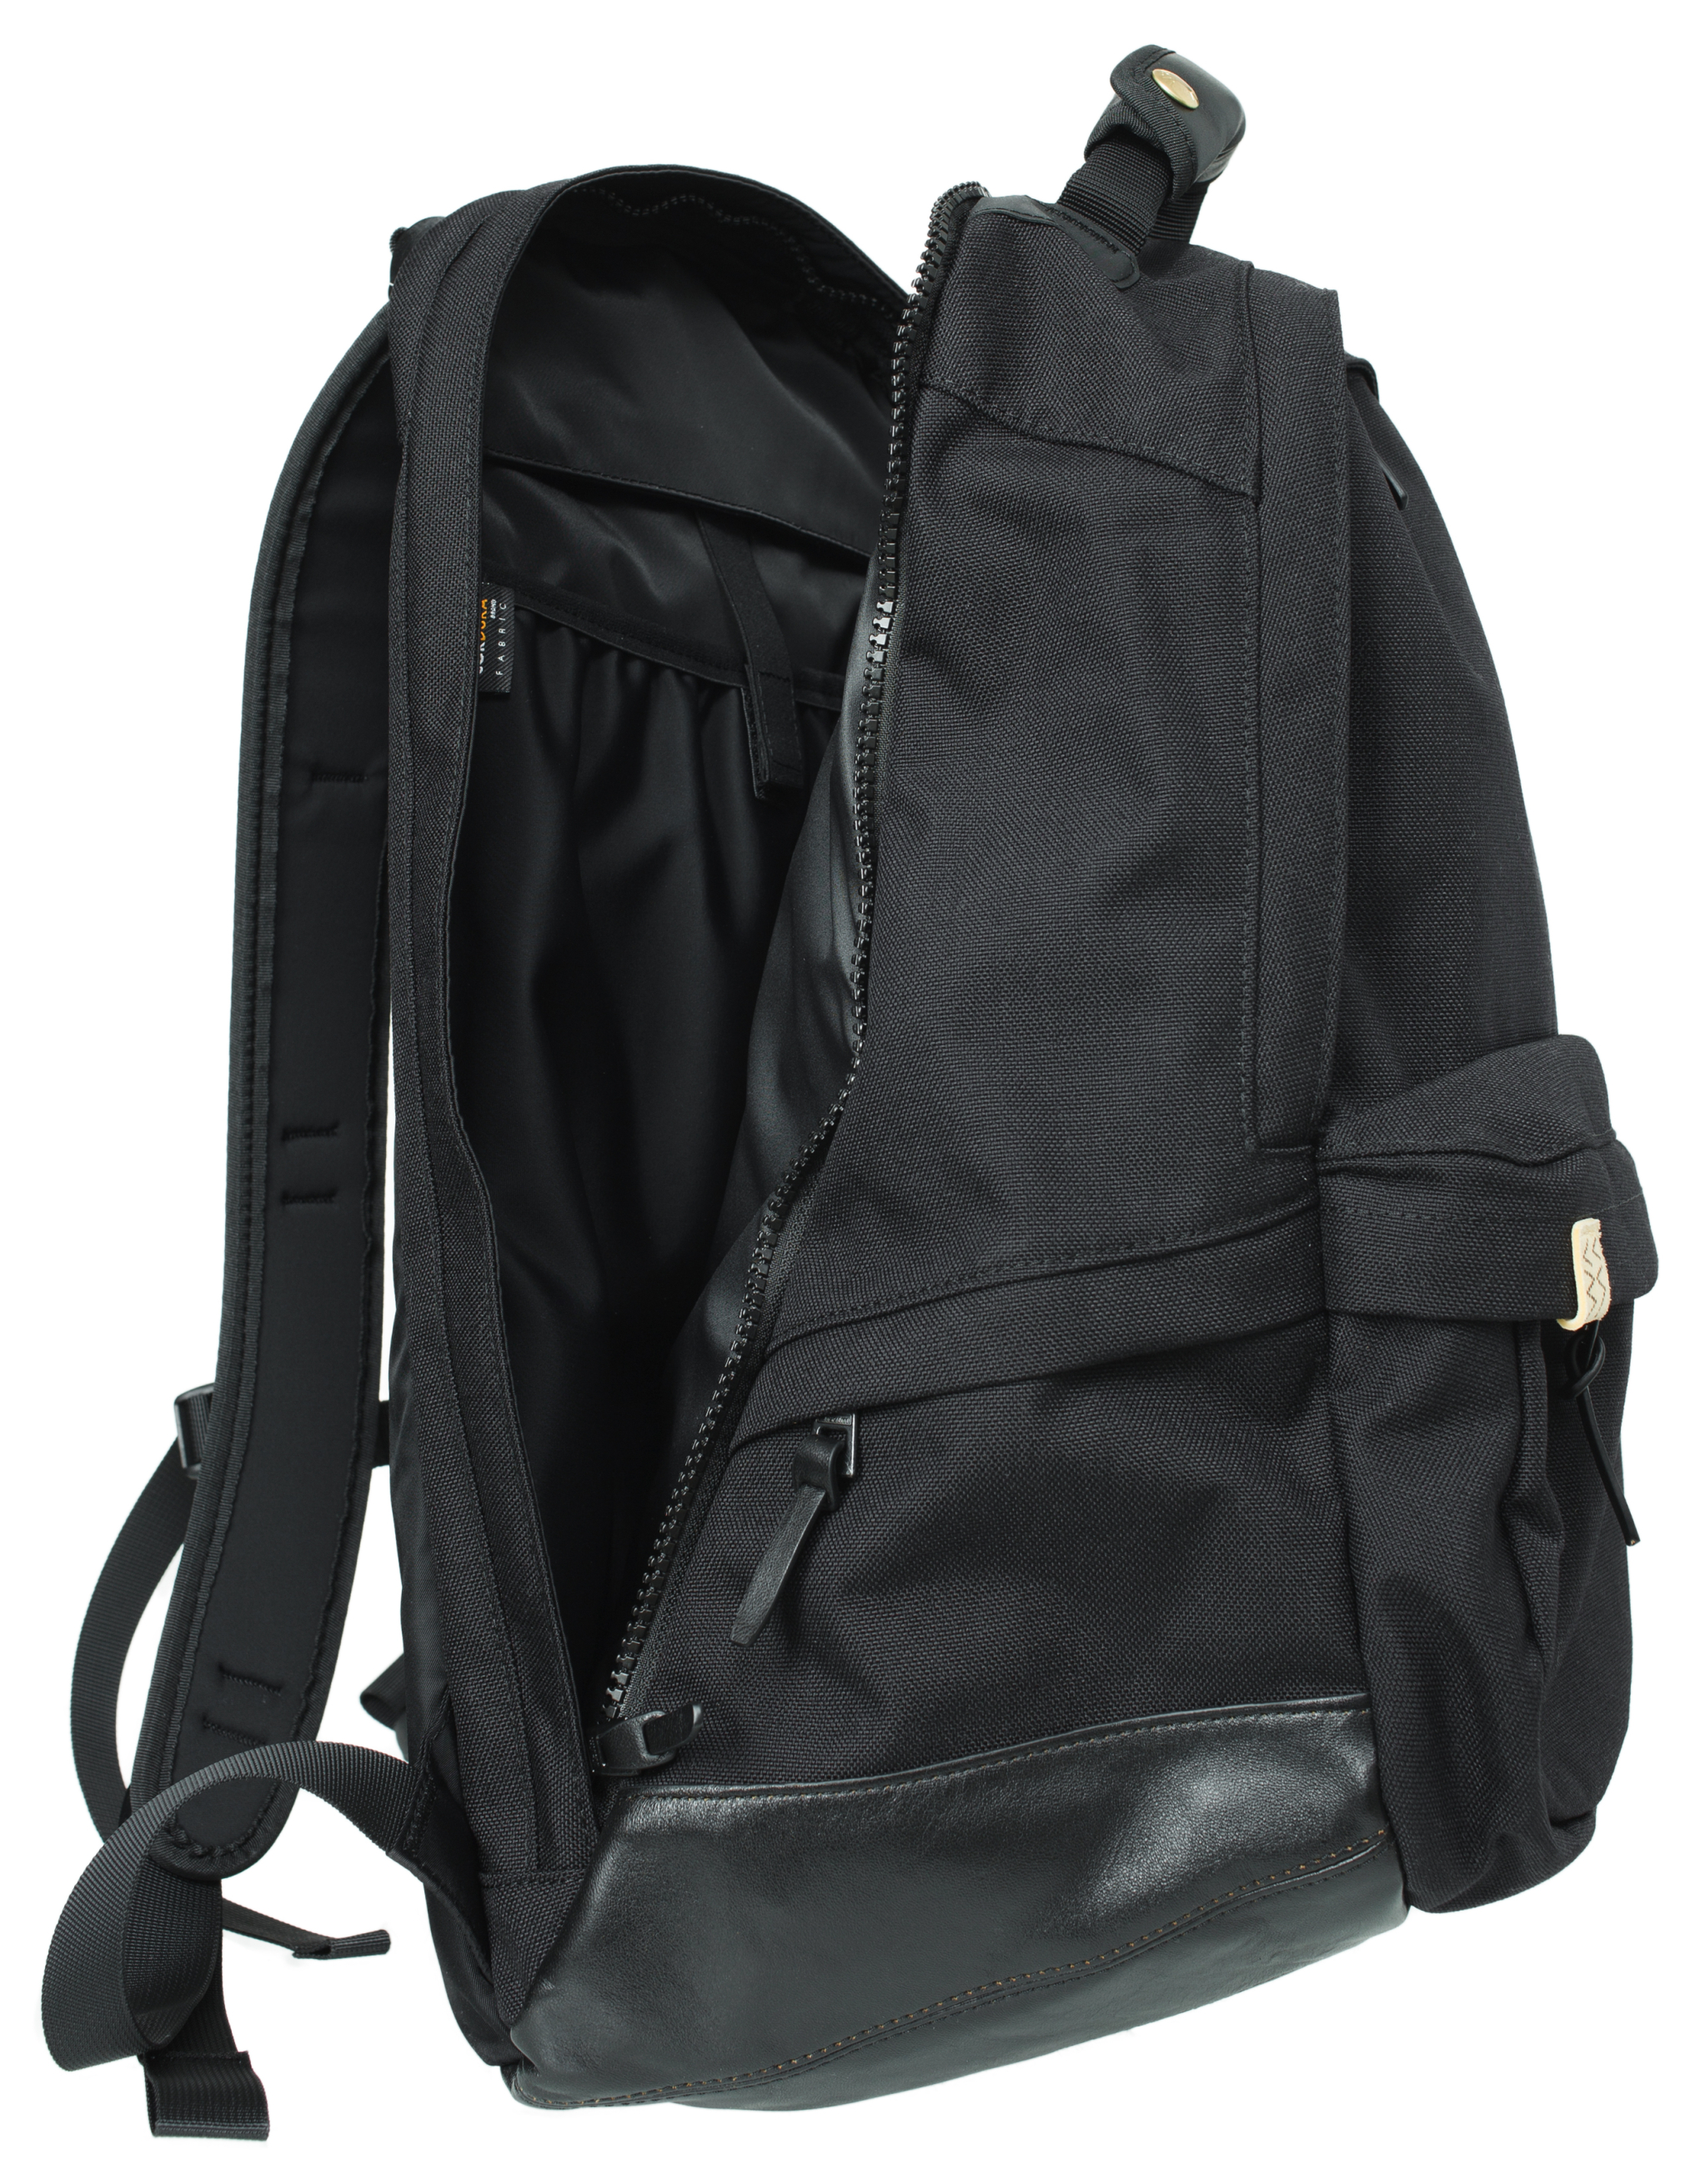 Комбинированный рюкзак Cordura 22L visvim 0123103003032/BLACK, размер One Size 0123103003032/BLACK - фото 2